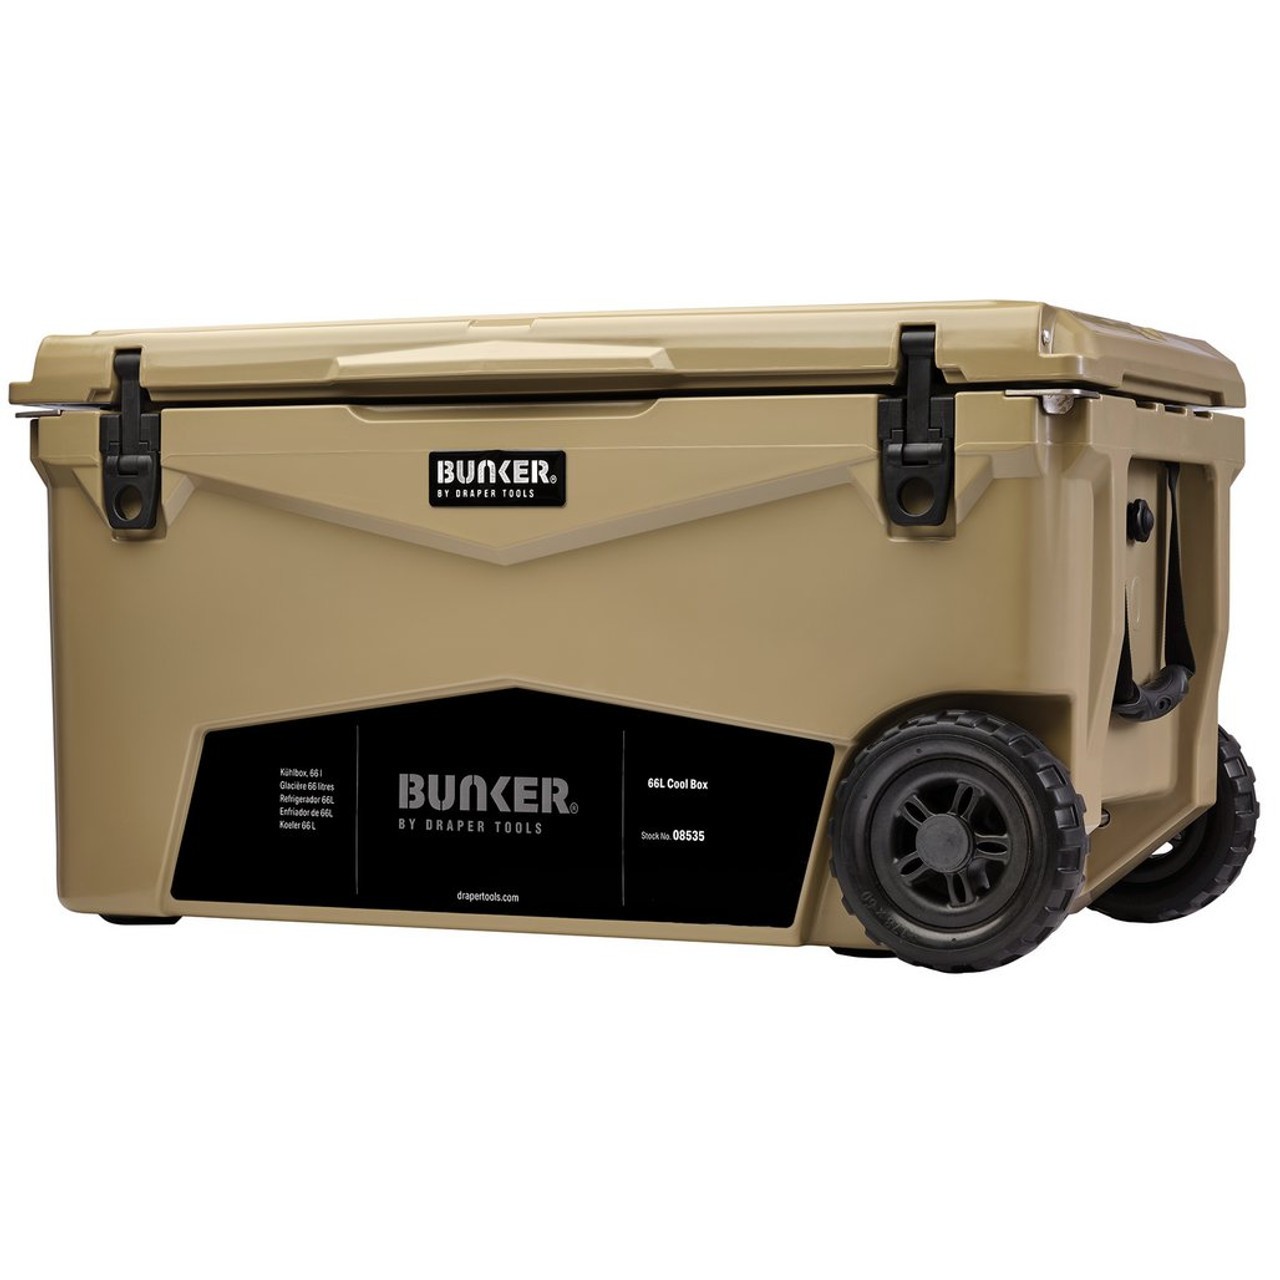 Draper Bunker 08535 66 Litre Cool Box